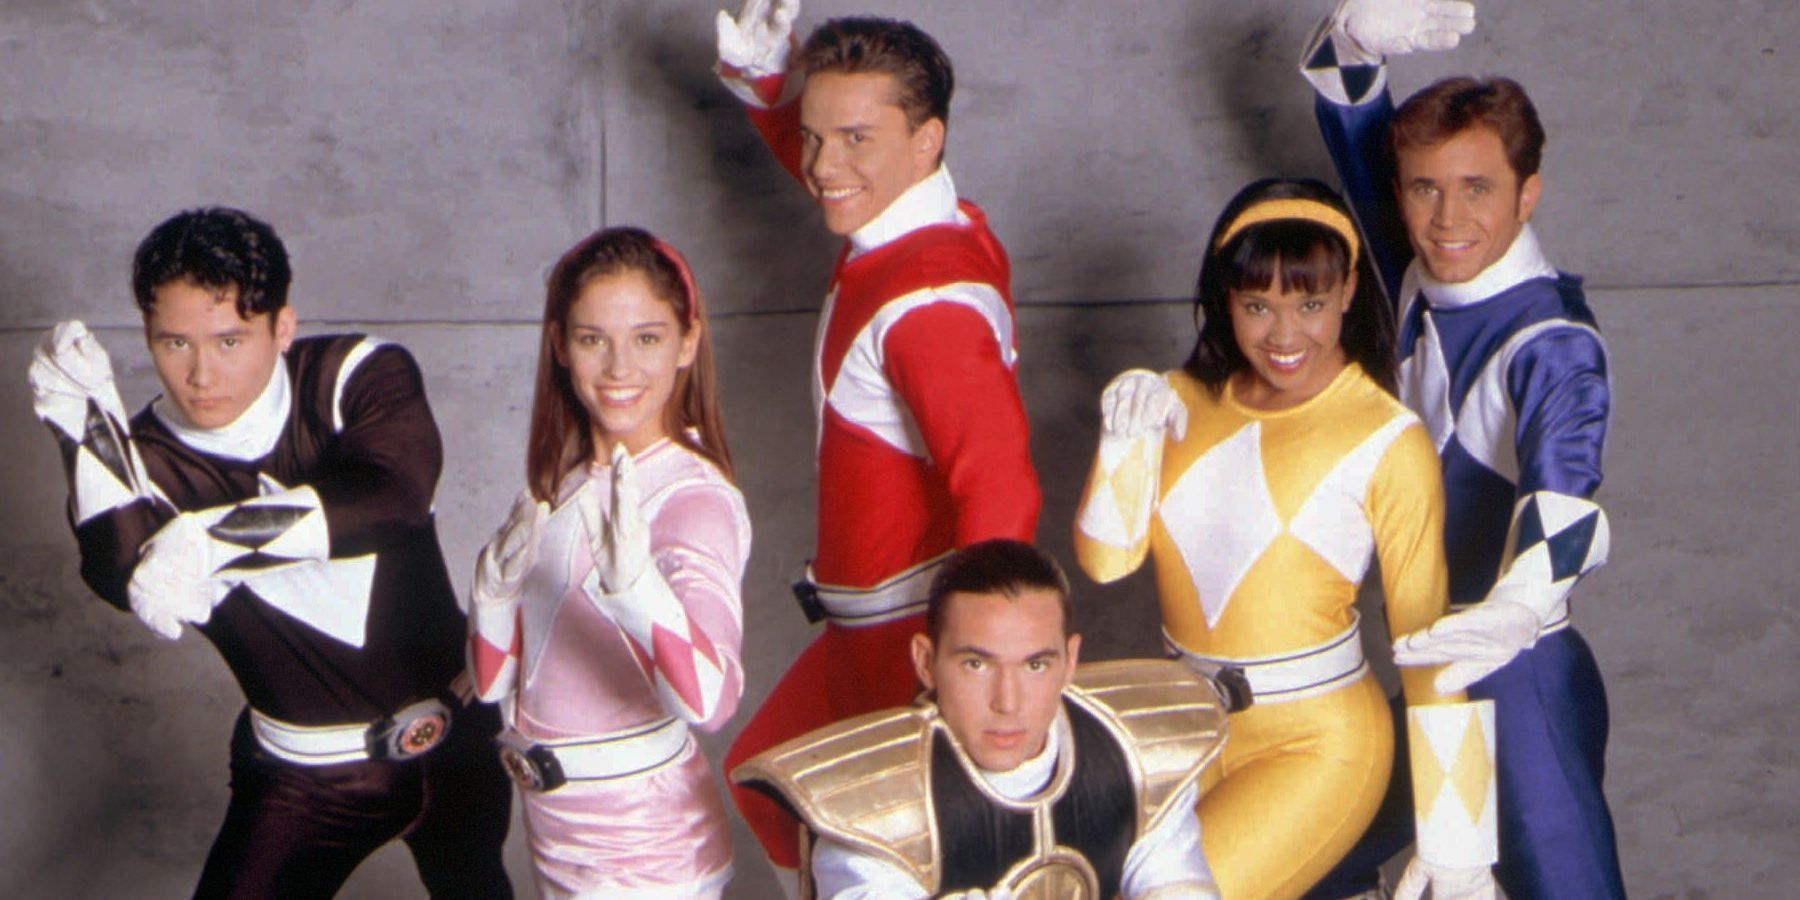 Power Rangers Movie Cast Photo 1995